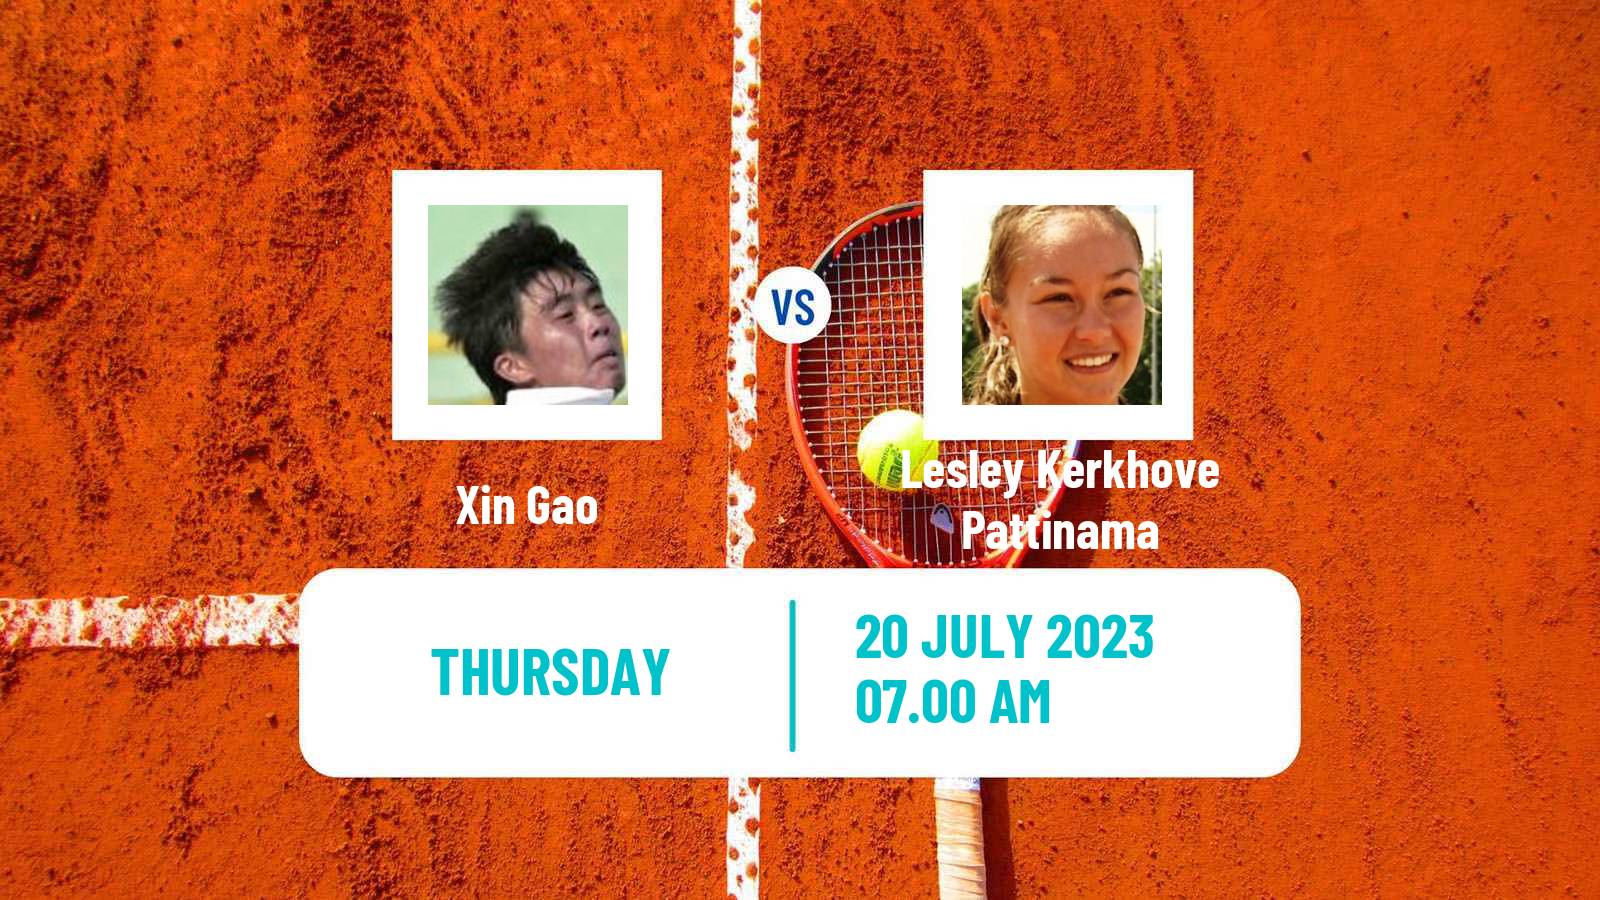 Tennis ITF W40 Porto 3 Women Xin Gao - Lesley Kerkhove Pattinama